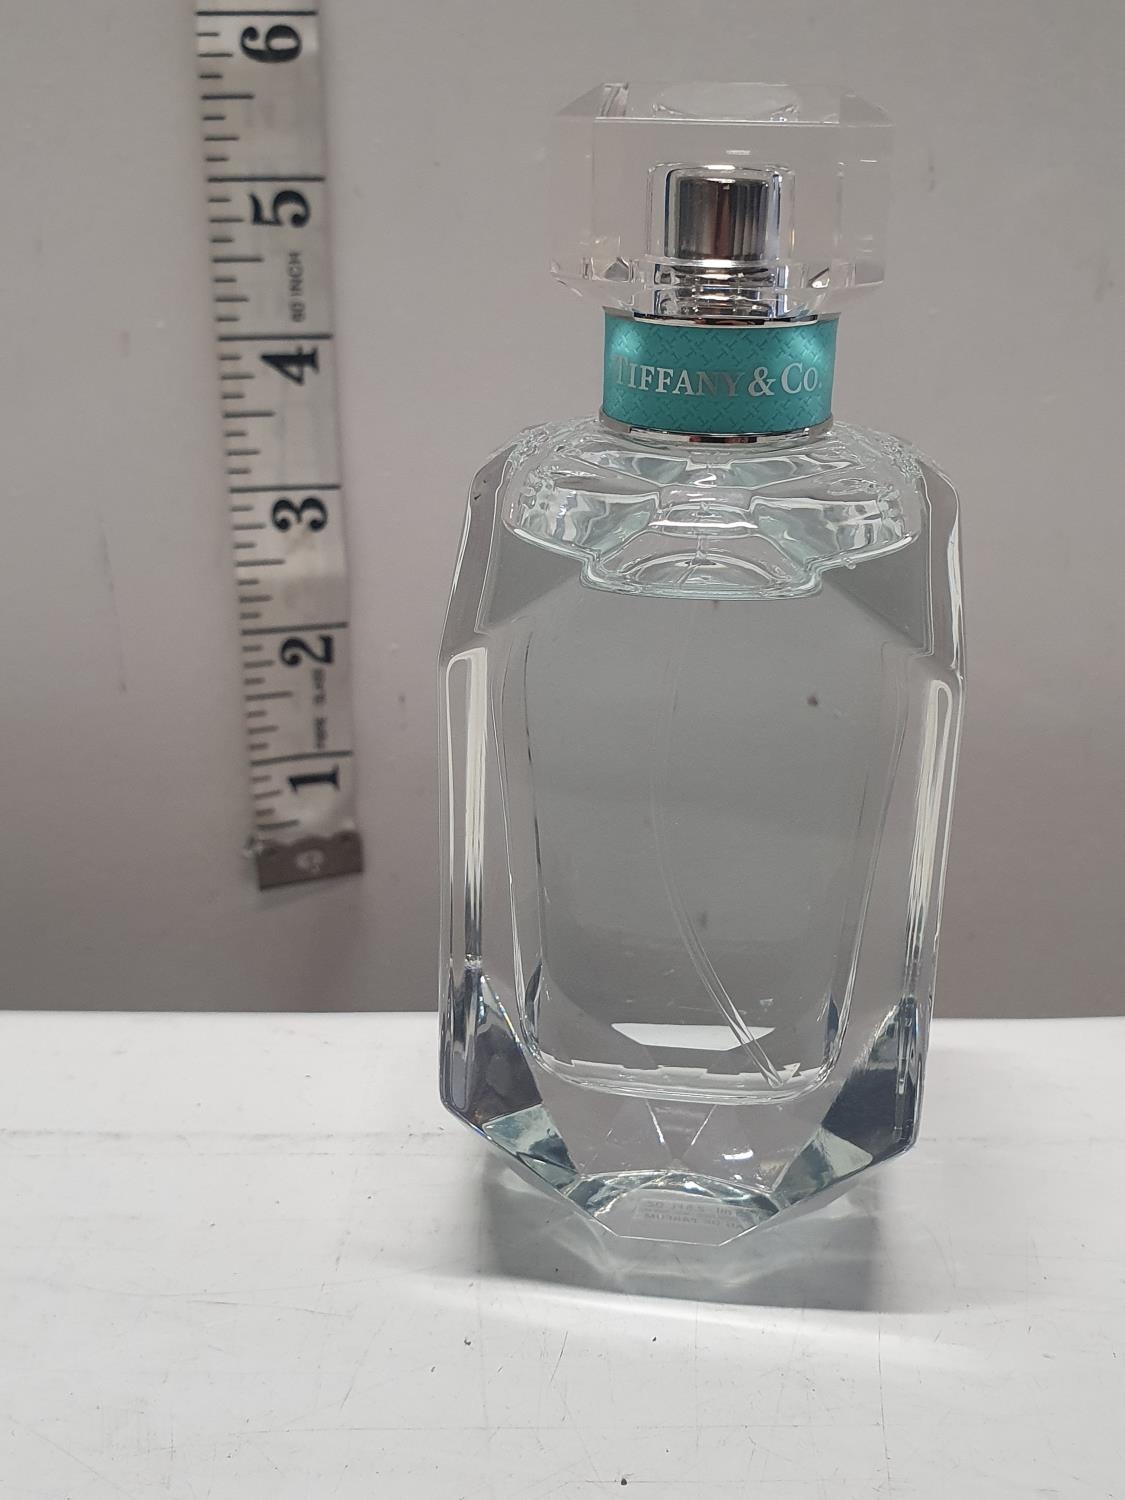 A Tiffany and co perfume